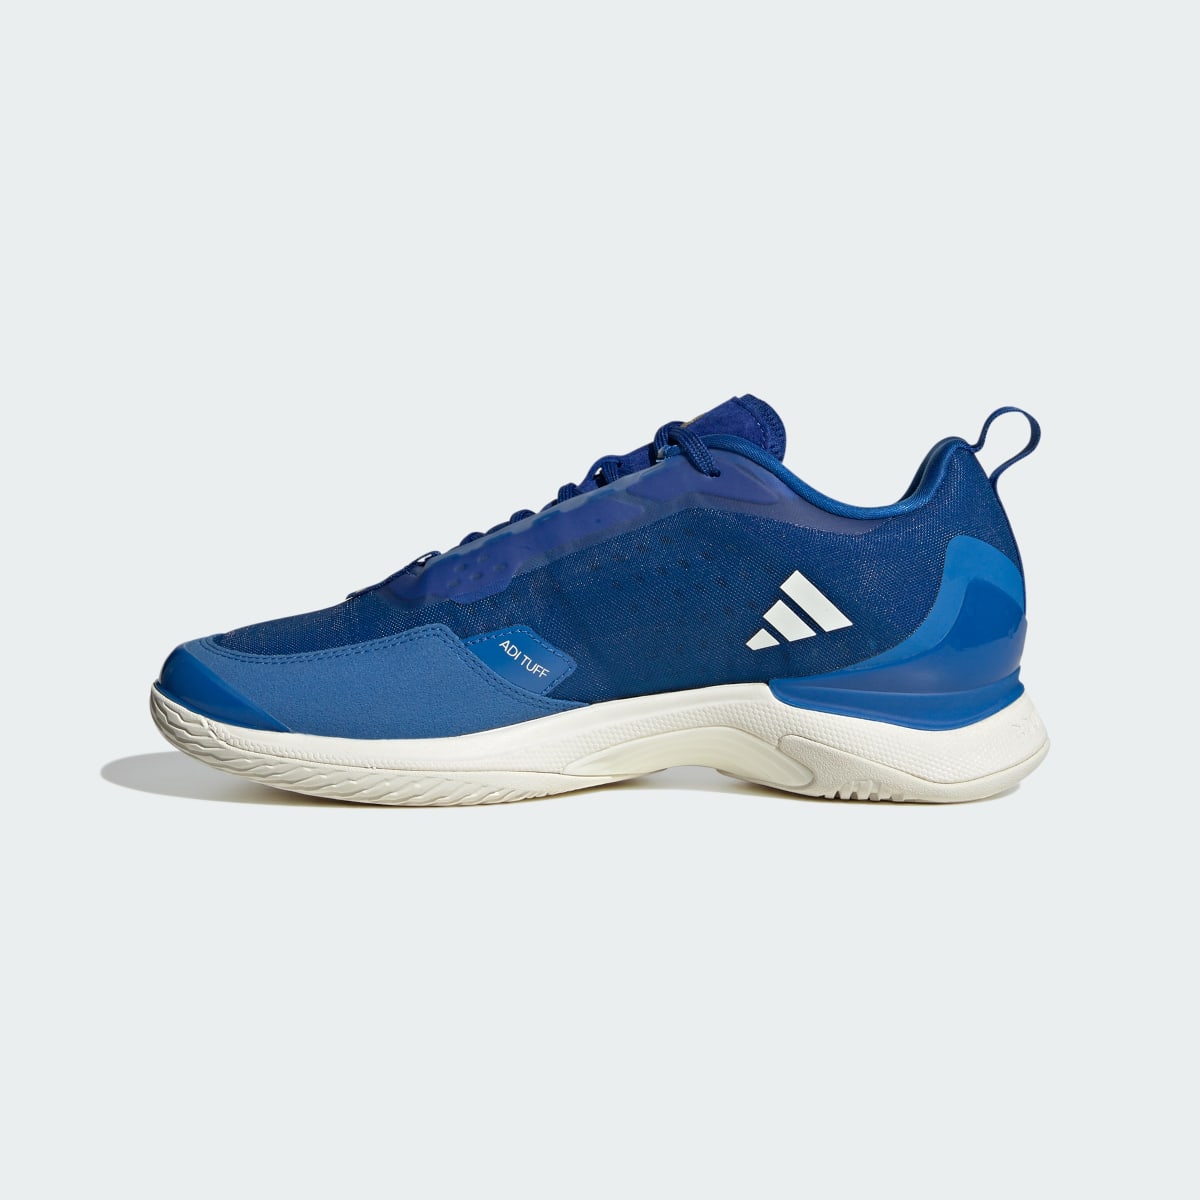 Adidas Avacourt Tennis Shoes. 10